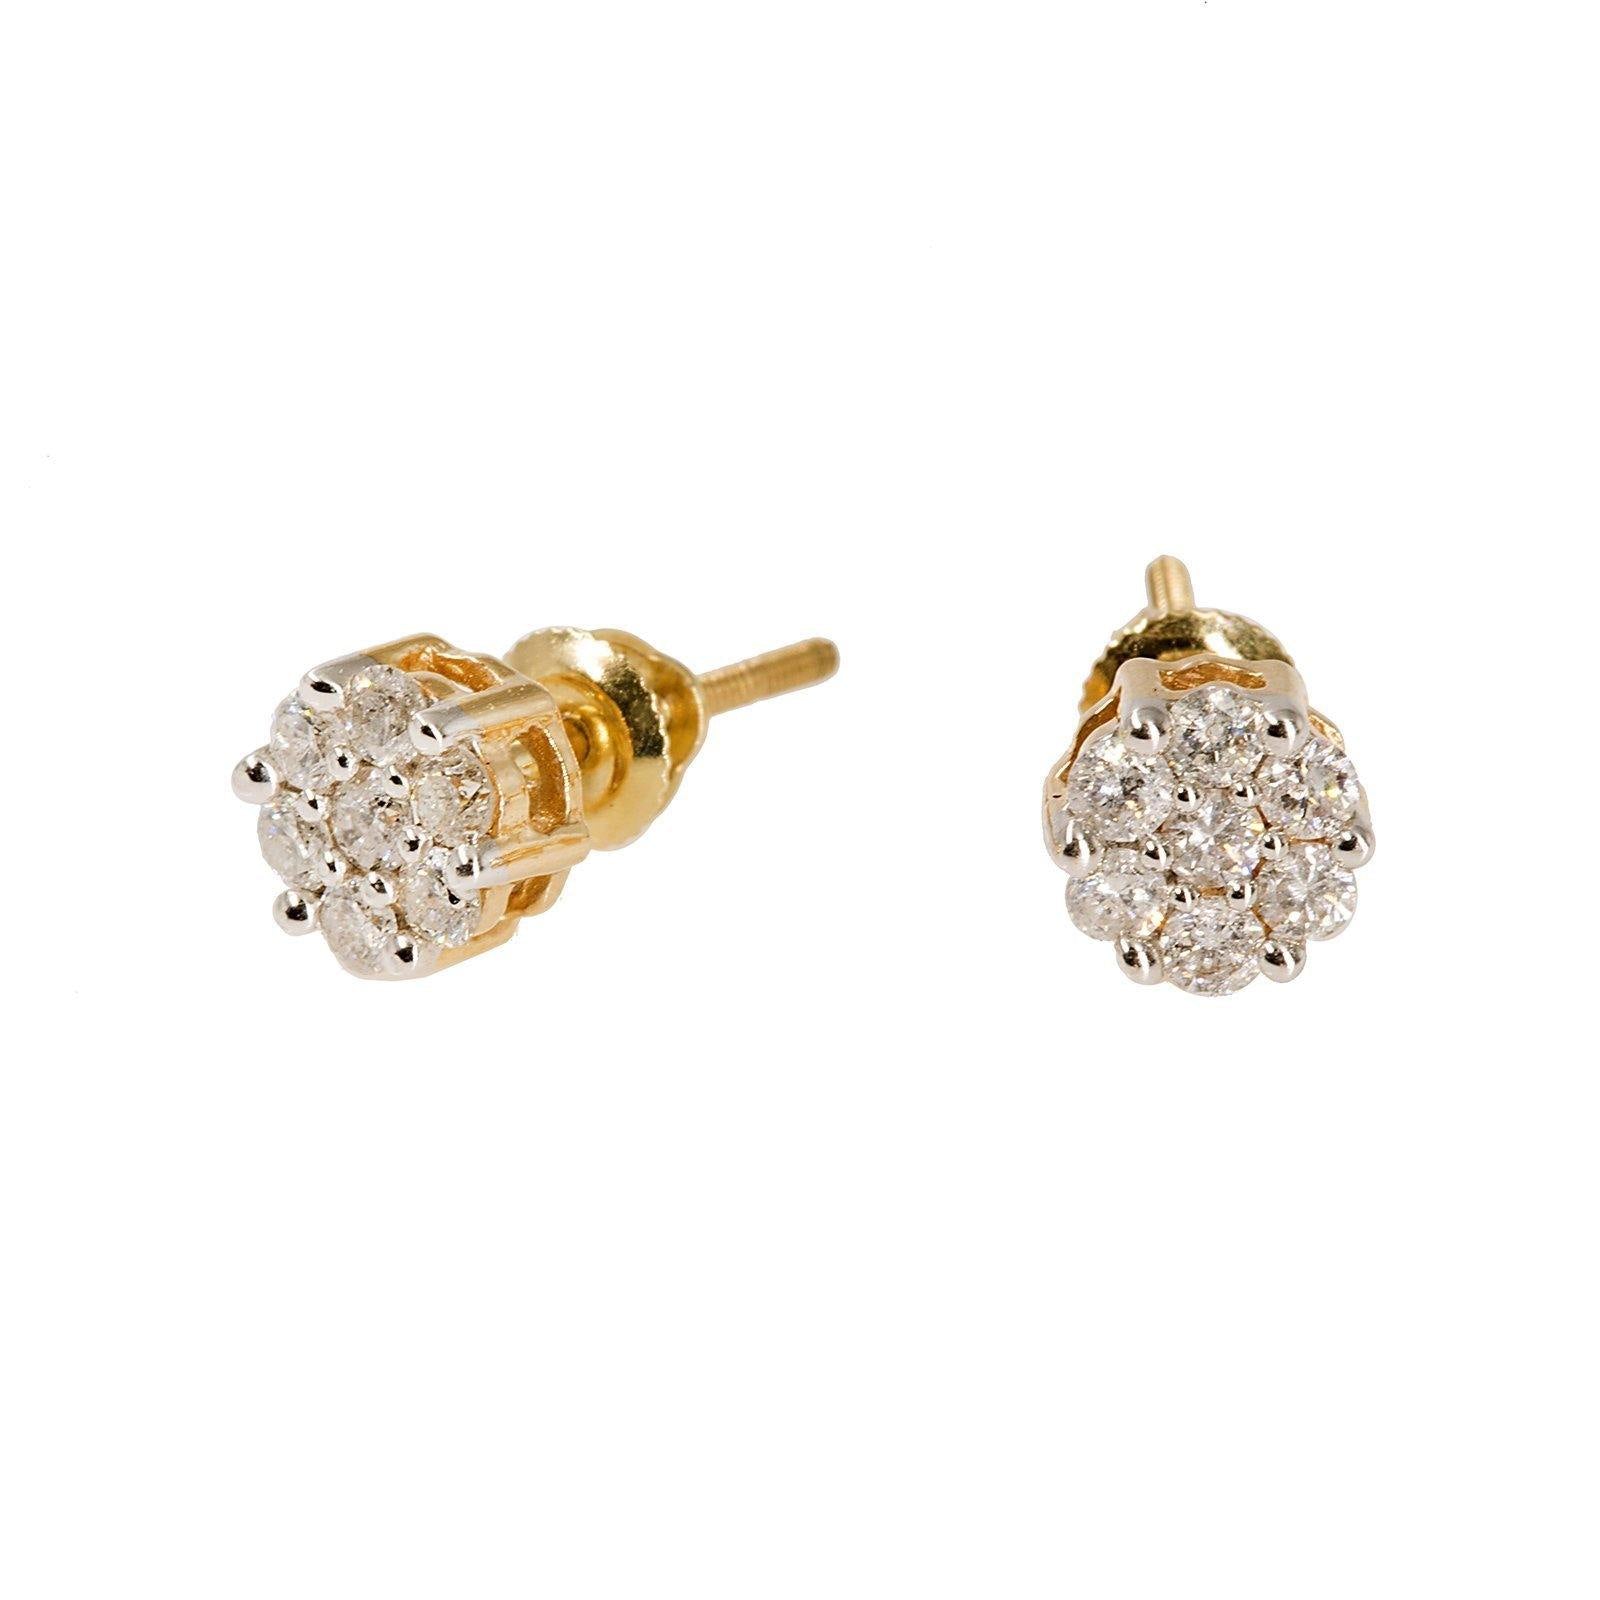 Buy 14K Yellow Gold Studs Earrings VER-2032 Online from Vaibhav Jewellers